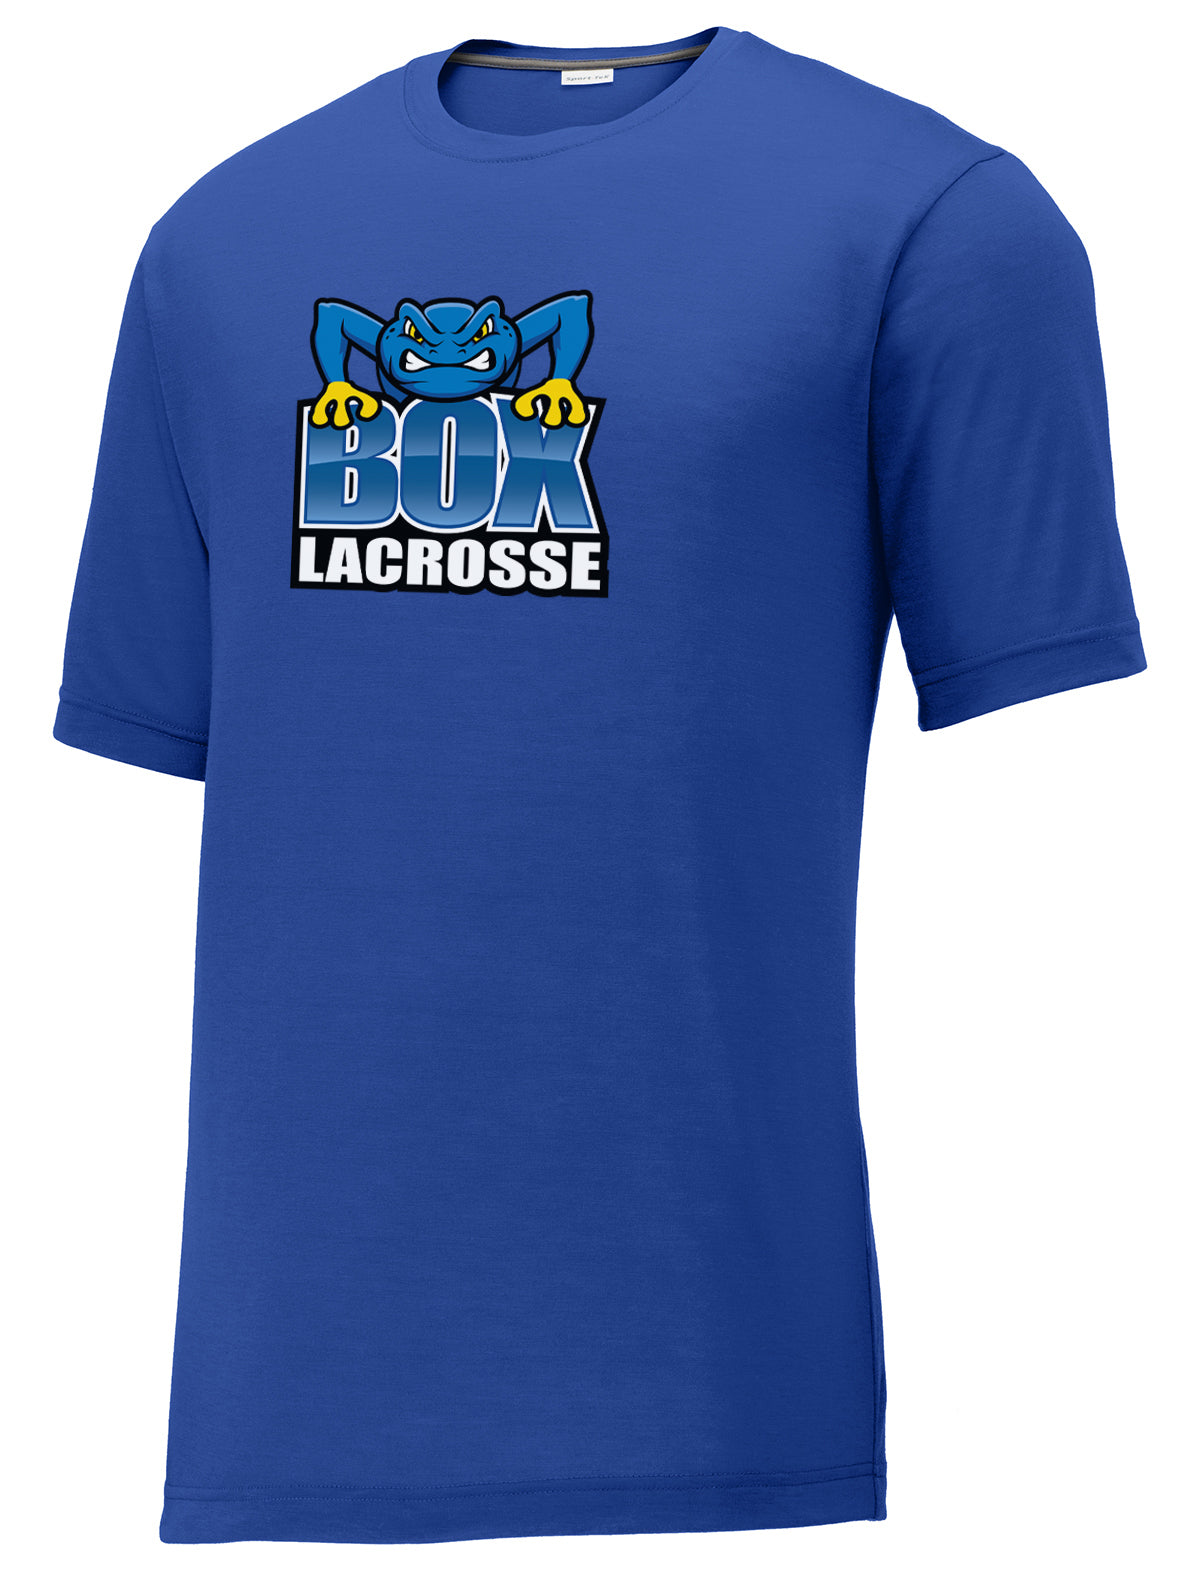 Frog Box Lacrosse Royal CottonTouch Performance T-Shirt